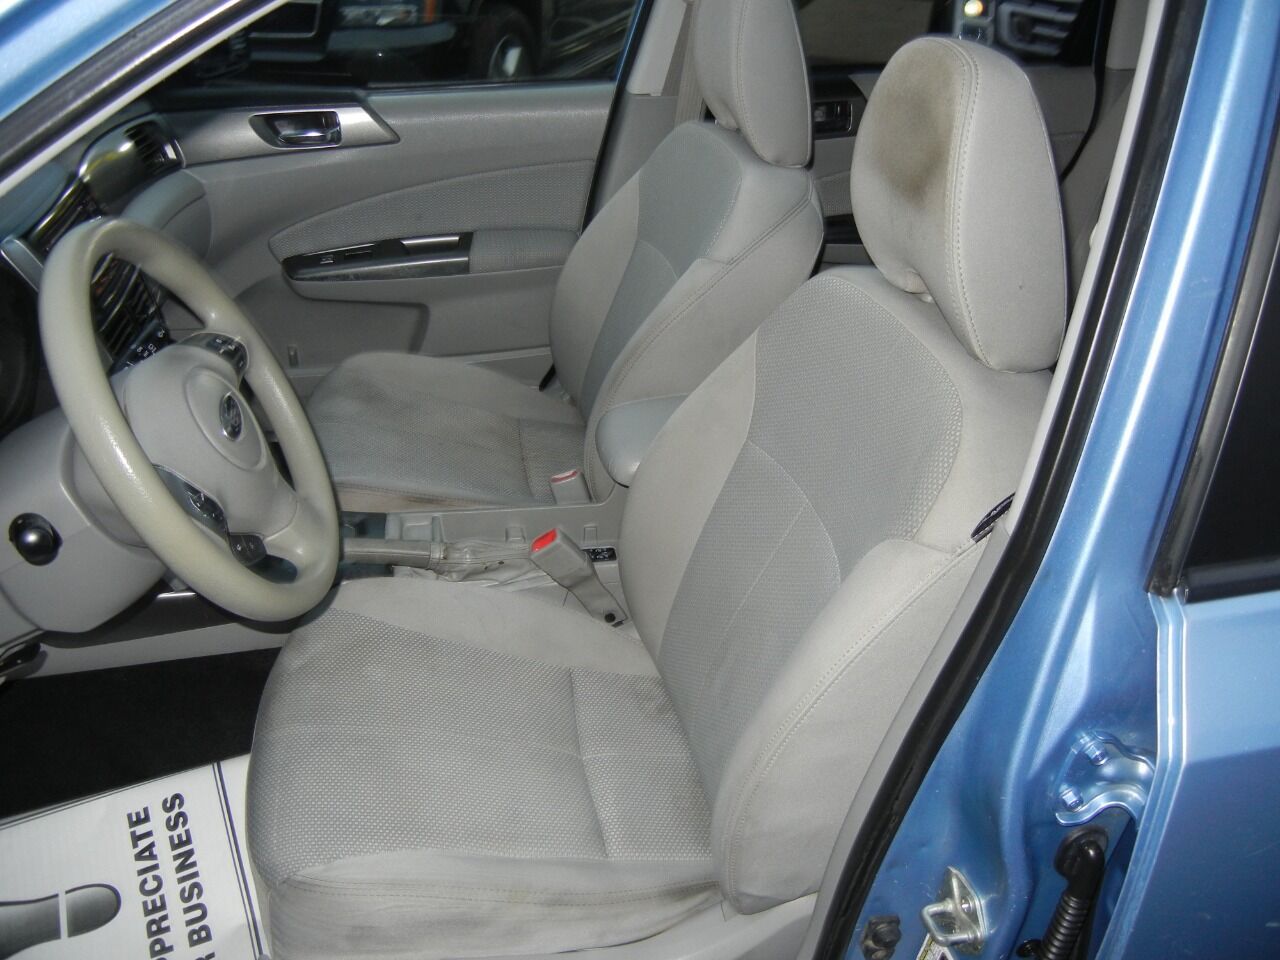 2011 Subaru Forester